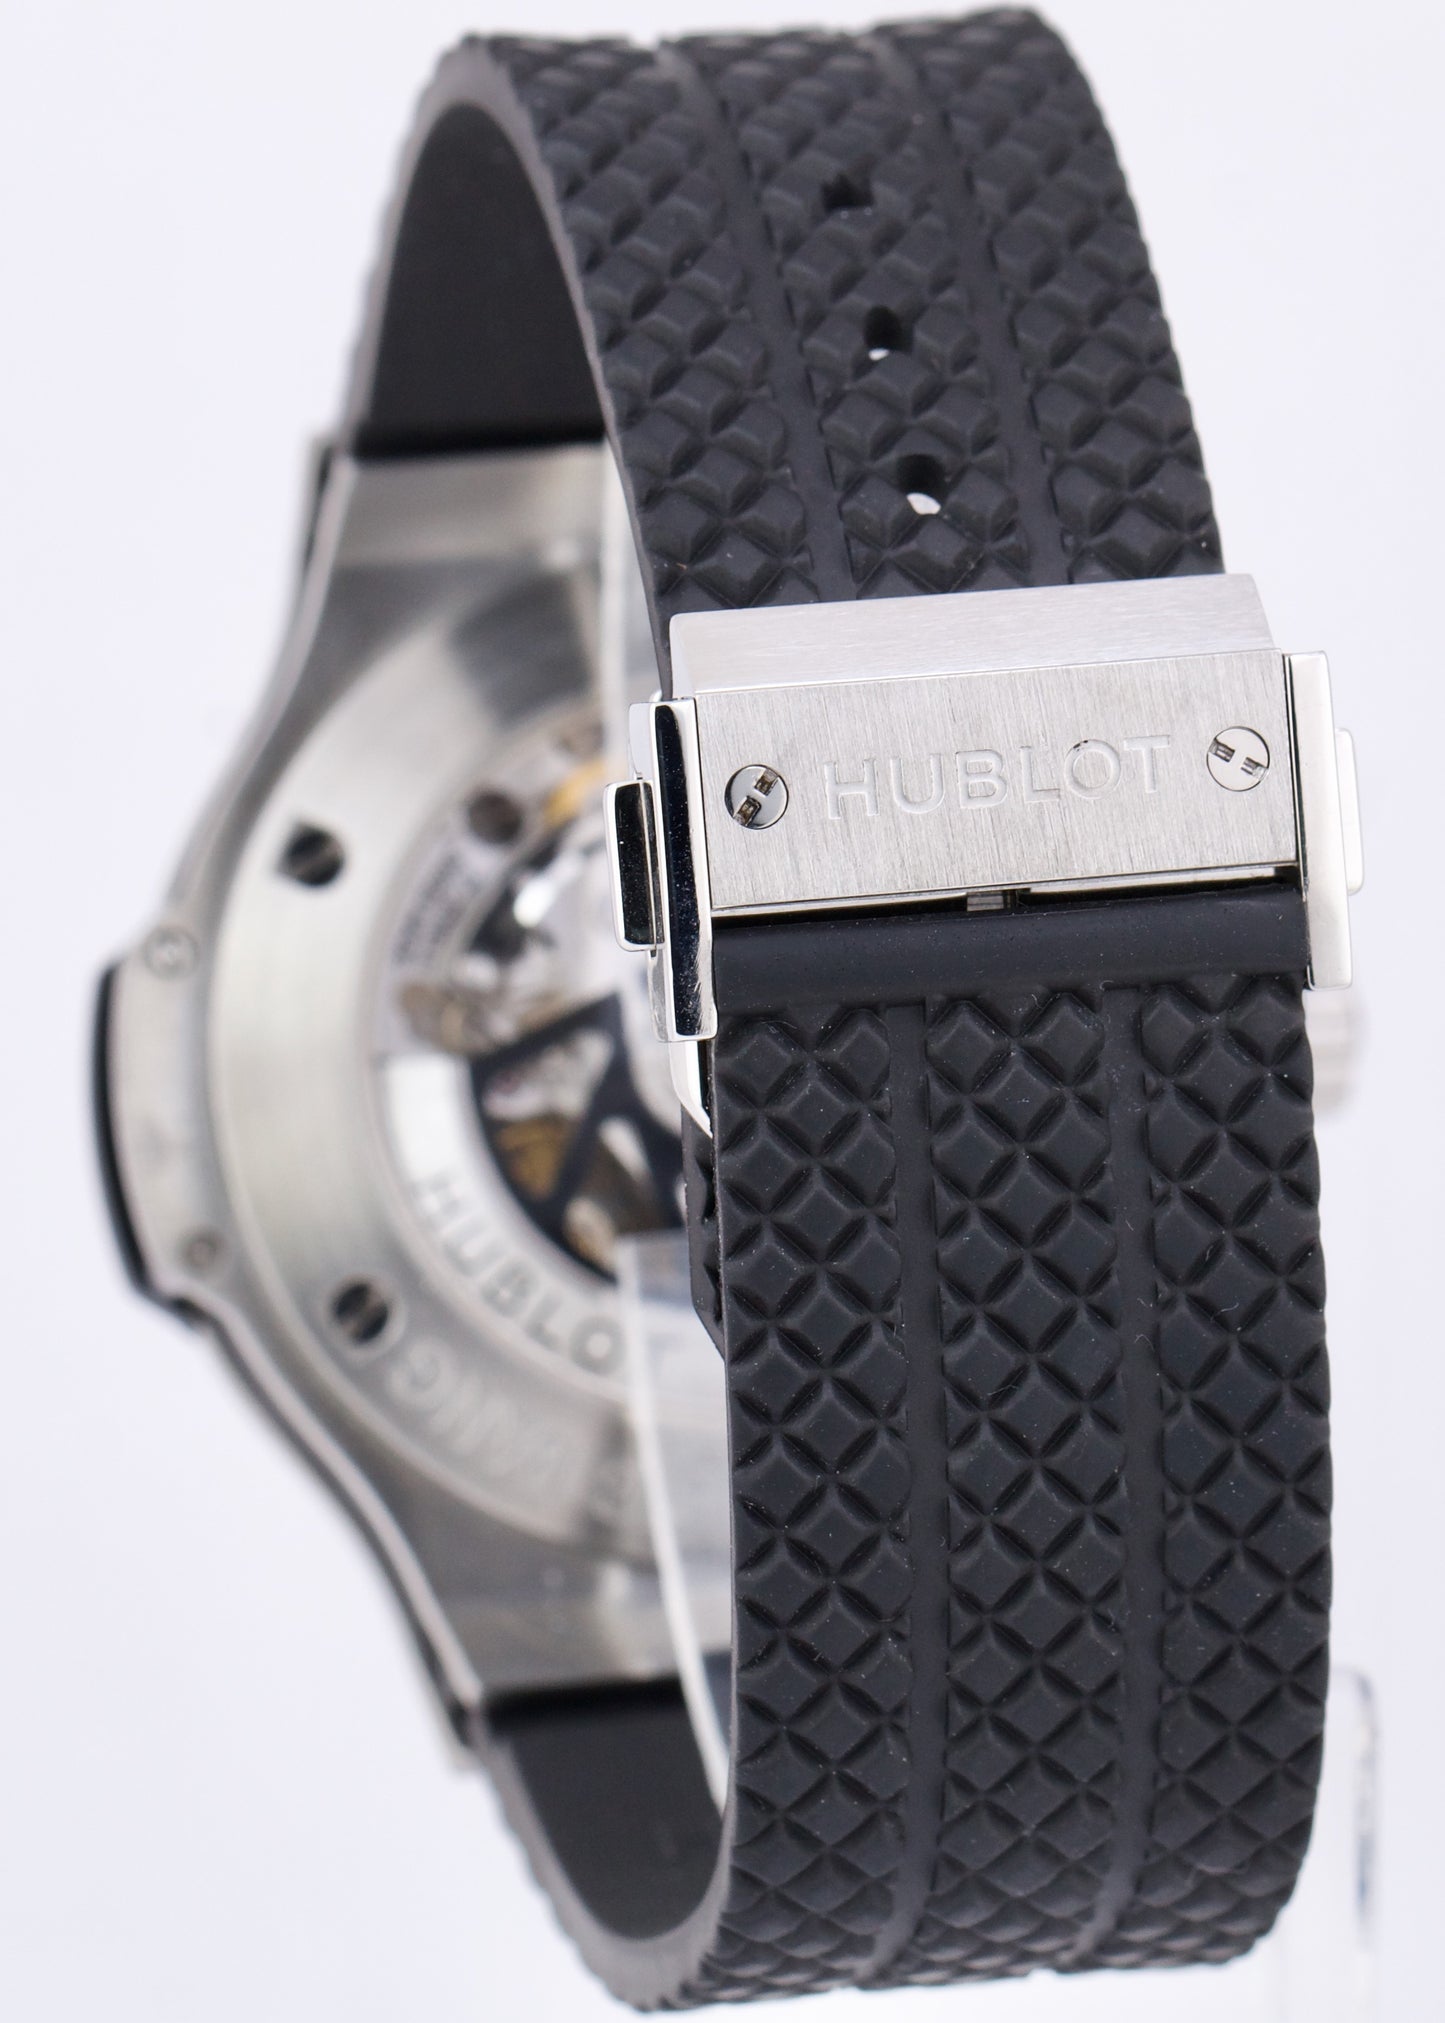 Hublot Big Bang Chronograph Black Rubber Stainless 44mm Watch 301.SM.1770.RX